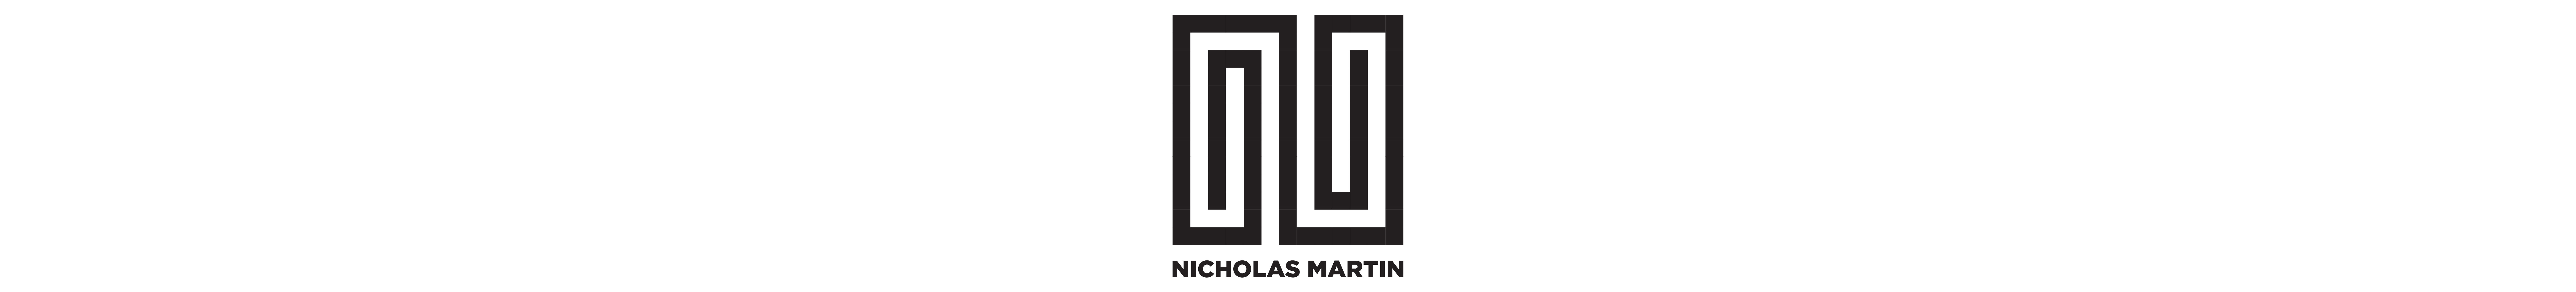 Nicholas Martin 的个人资料横幅